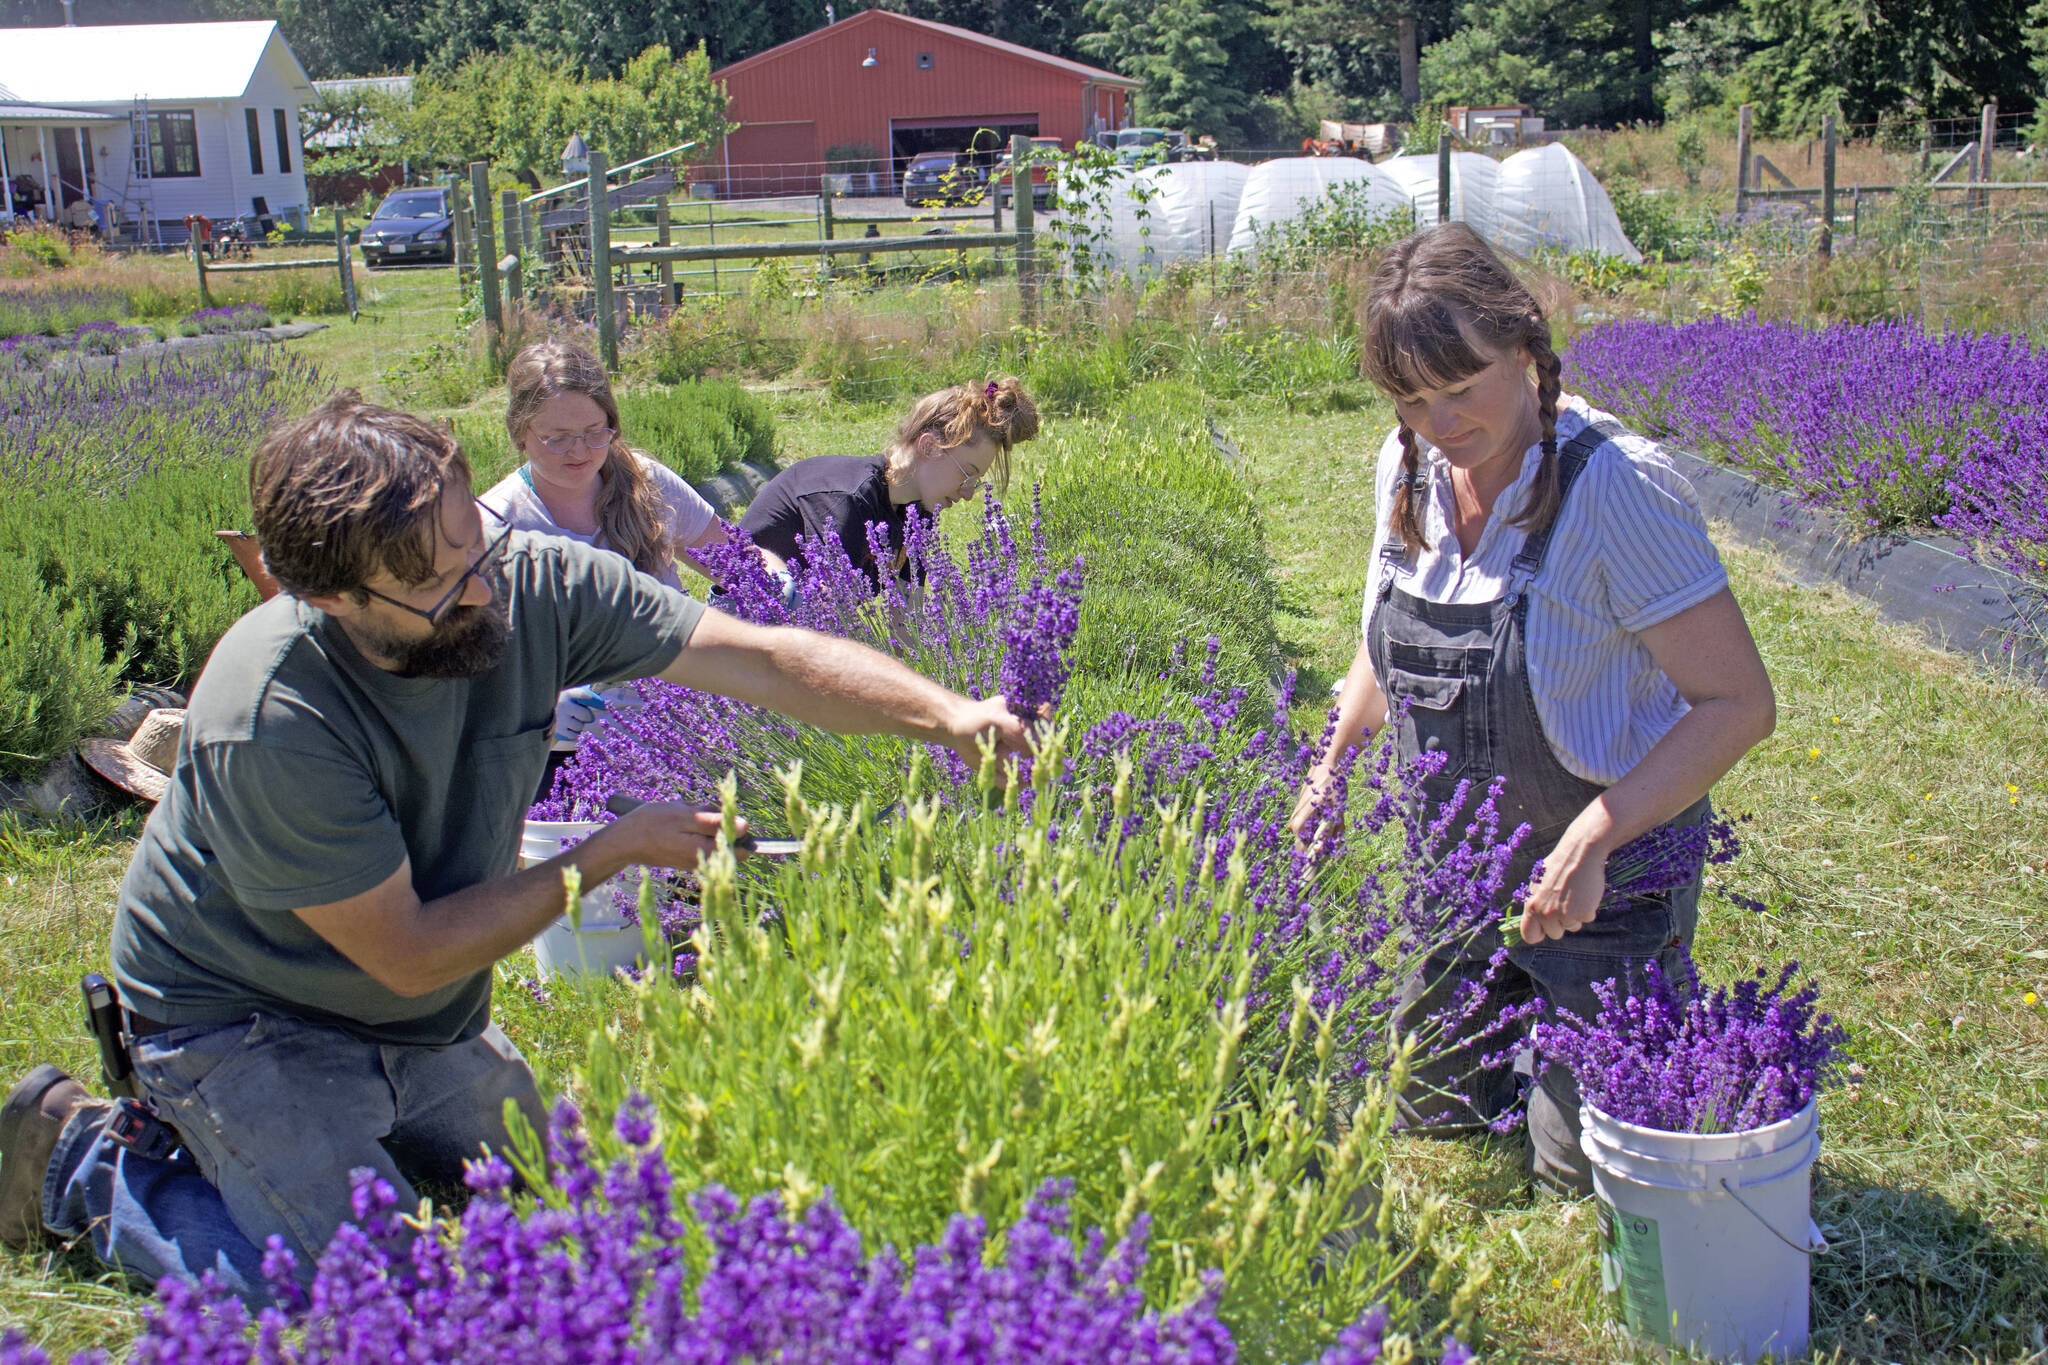 Photo by Rachel Rosen/Whidbey News-Times
From left, Sam Stanton, Sara Berlowe, Rylan Johnson and Caitlin Stanton harvest lavender.